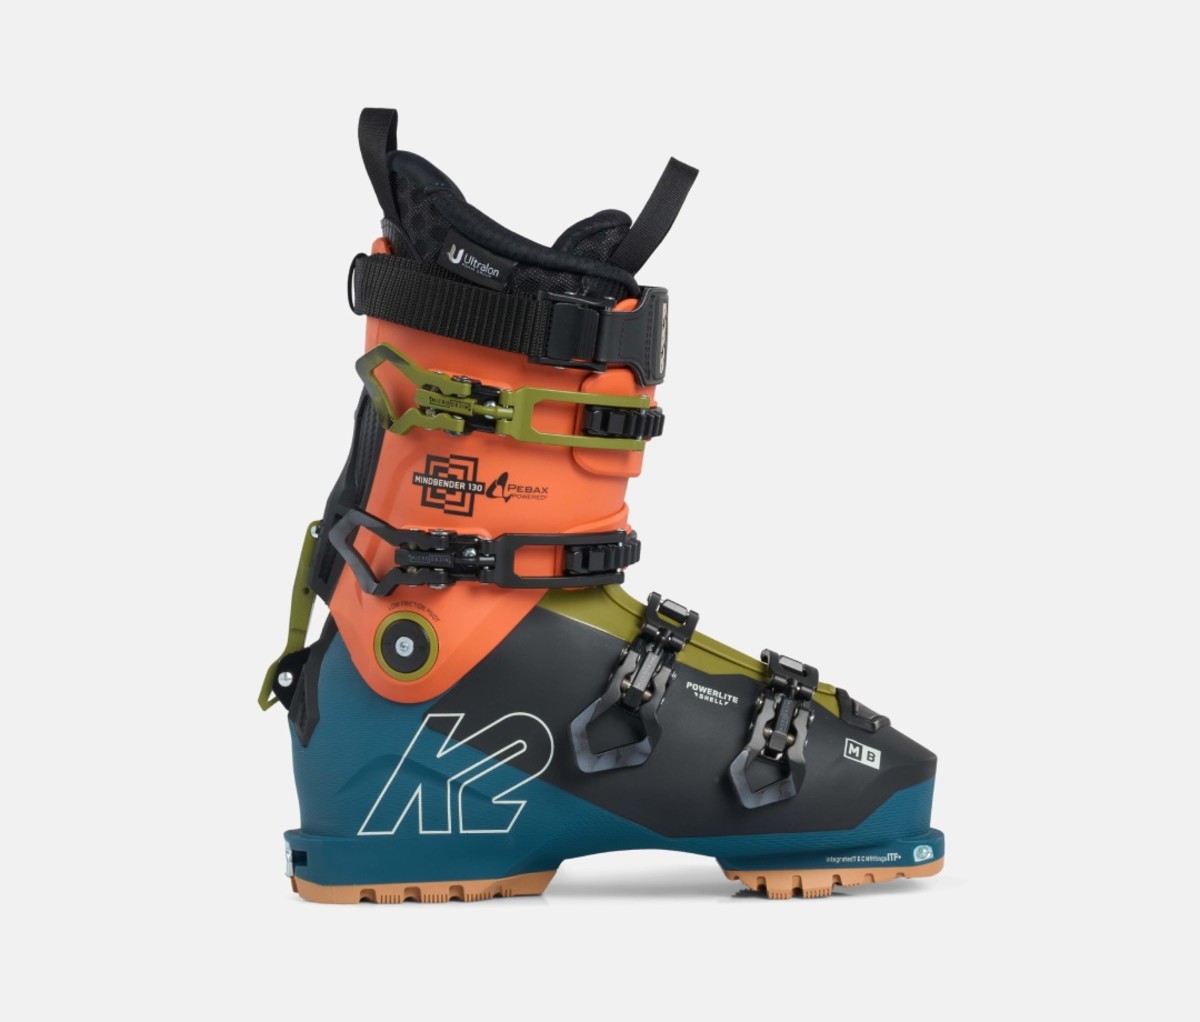 Orange, blue, and black ski boot